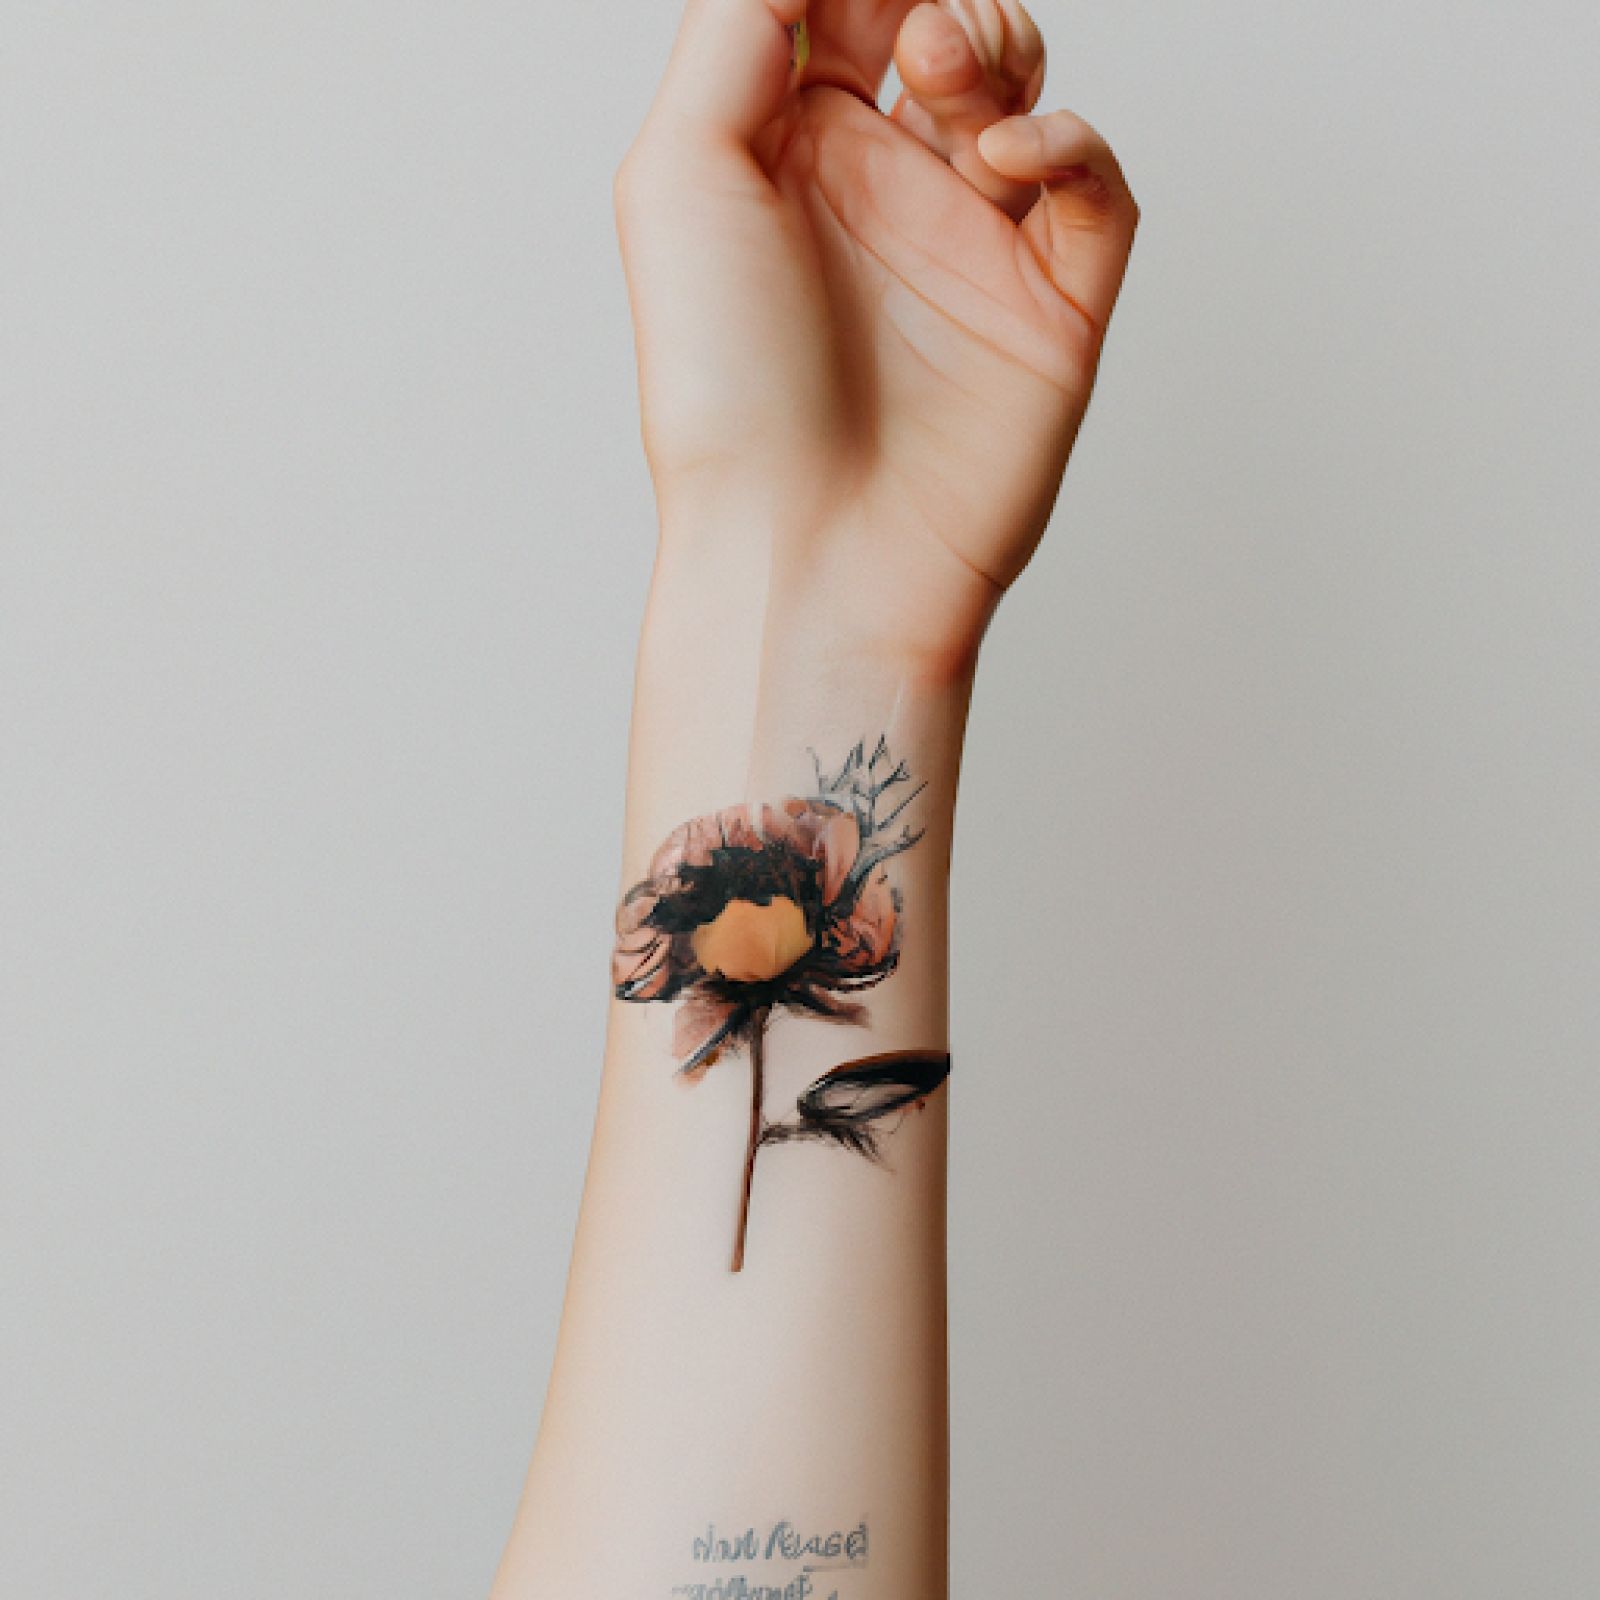 Flower tattoo on wrist for women